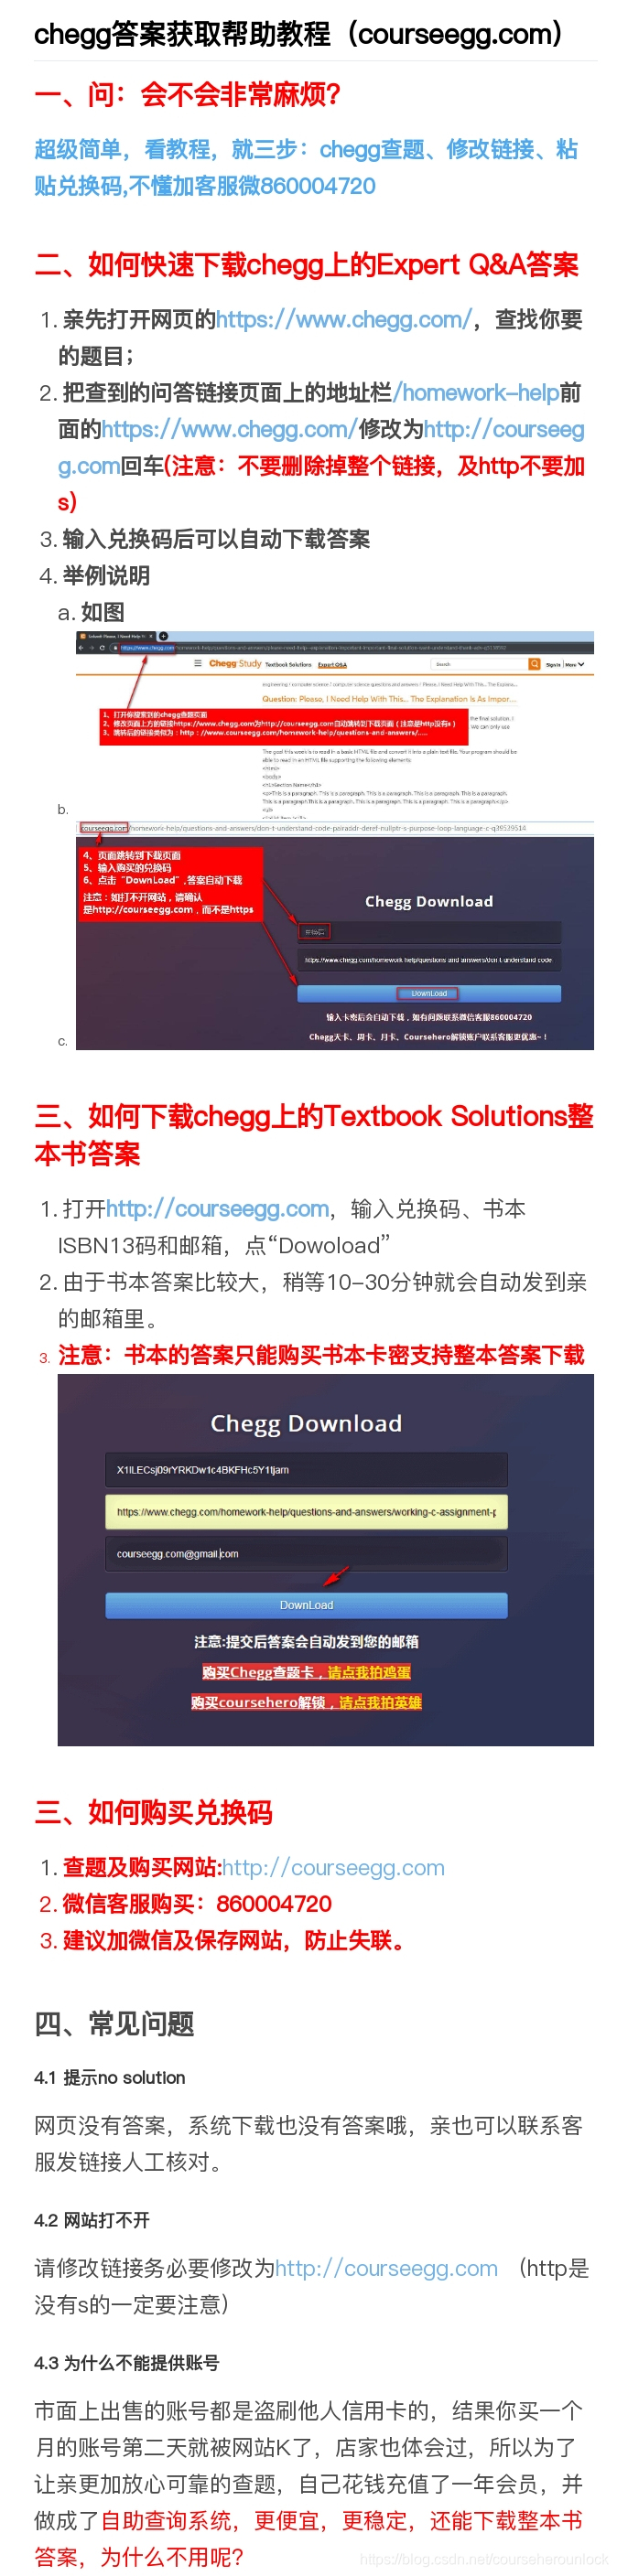 cheggѲcheggcheggԱ|how to free chegg answer| chegg crack|chegg Account|chegg answer free